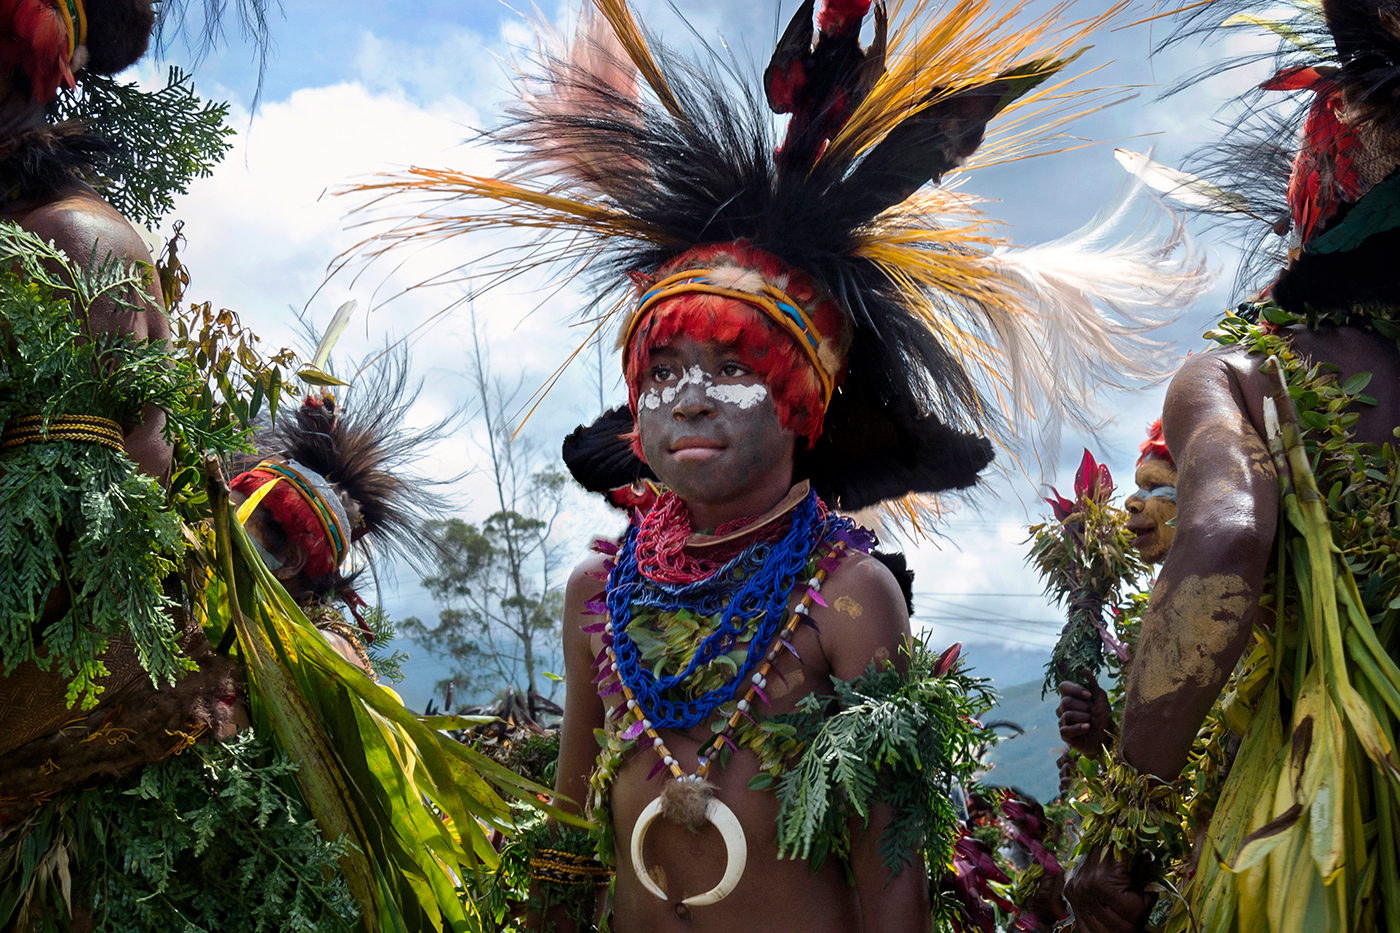 Papua New Guinea New Guinea goroka show festival Sing Sing Travel Portraiture portraits